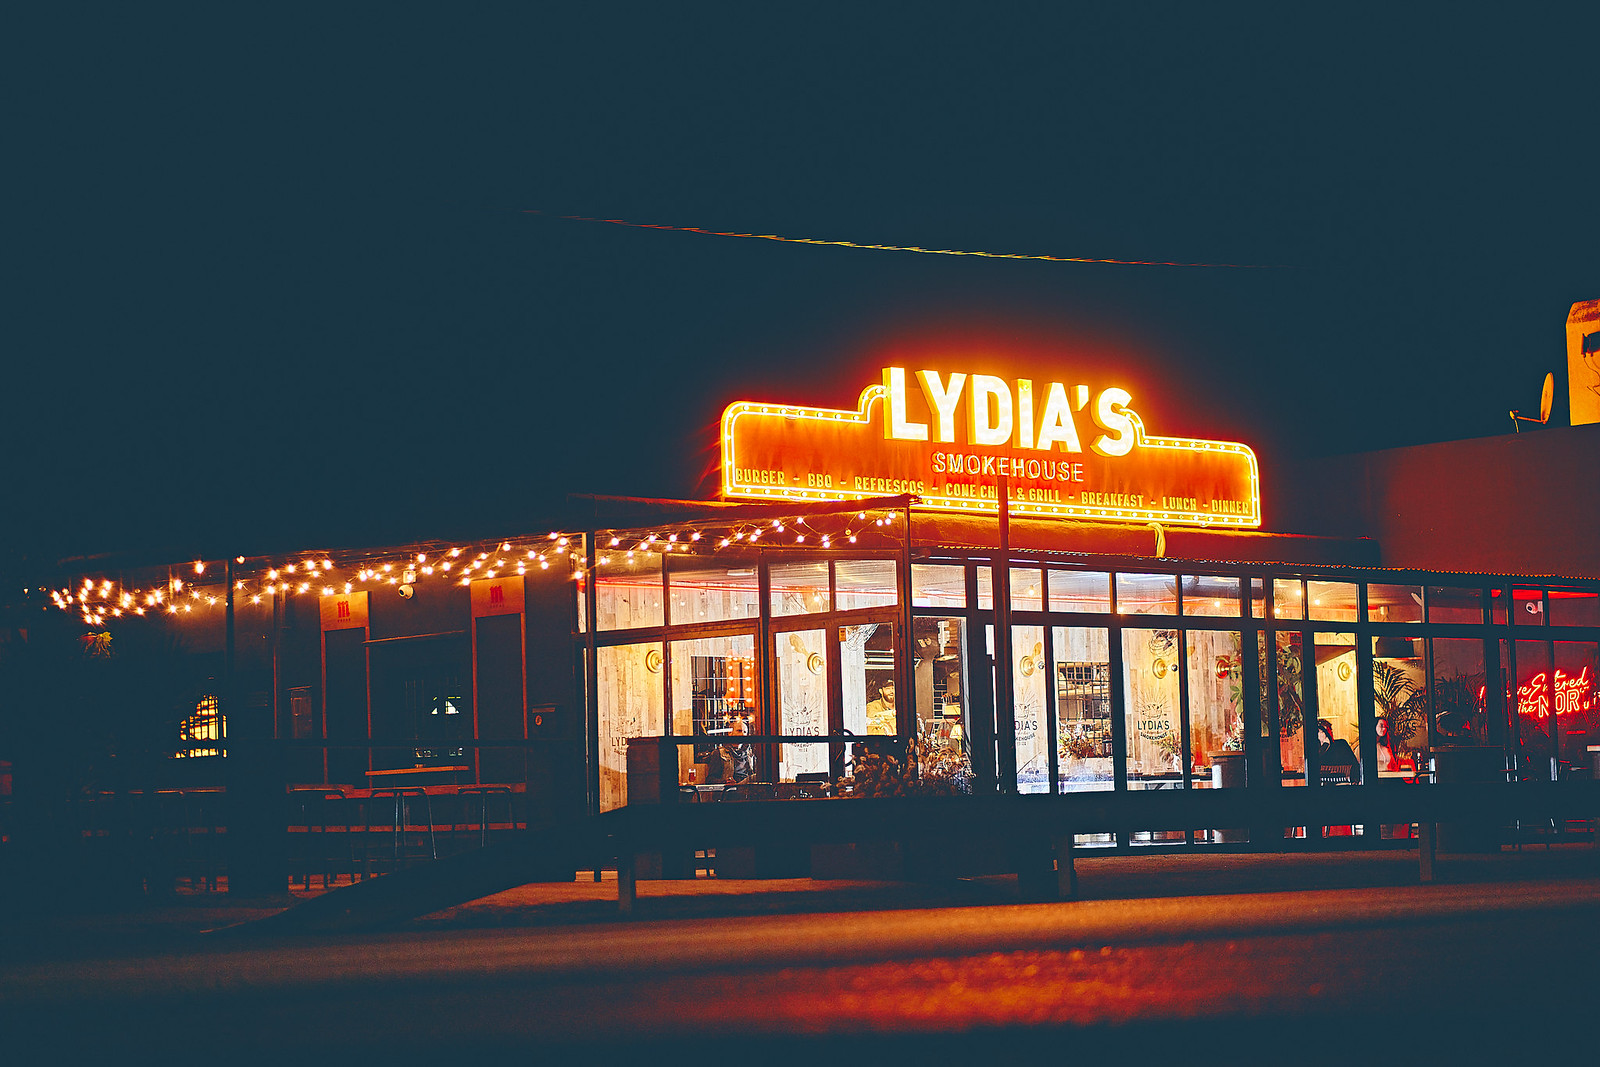 *Lydia’s Smokehouse – Open in winter